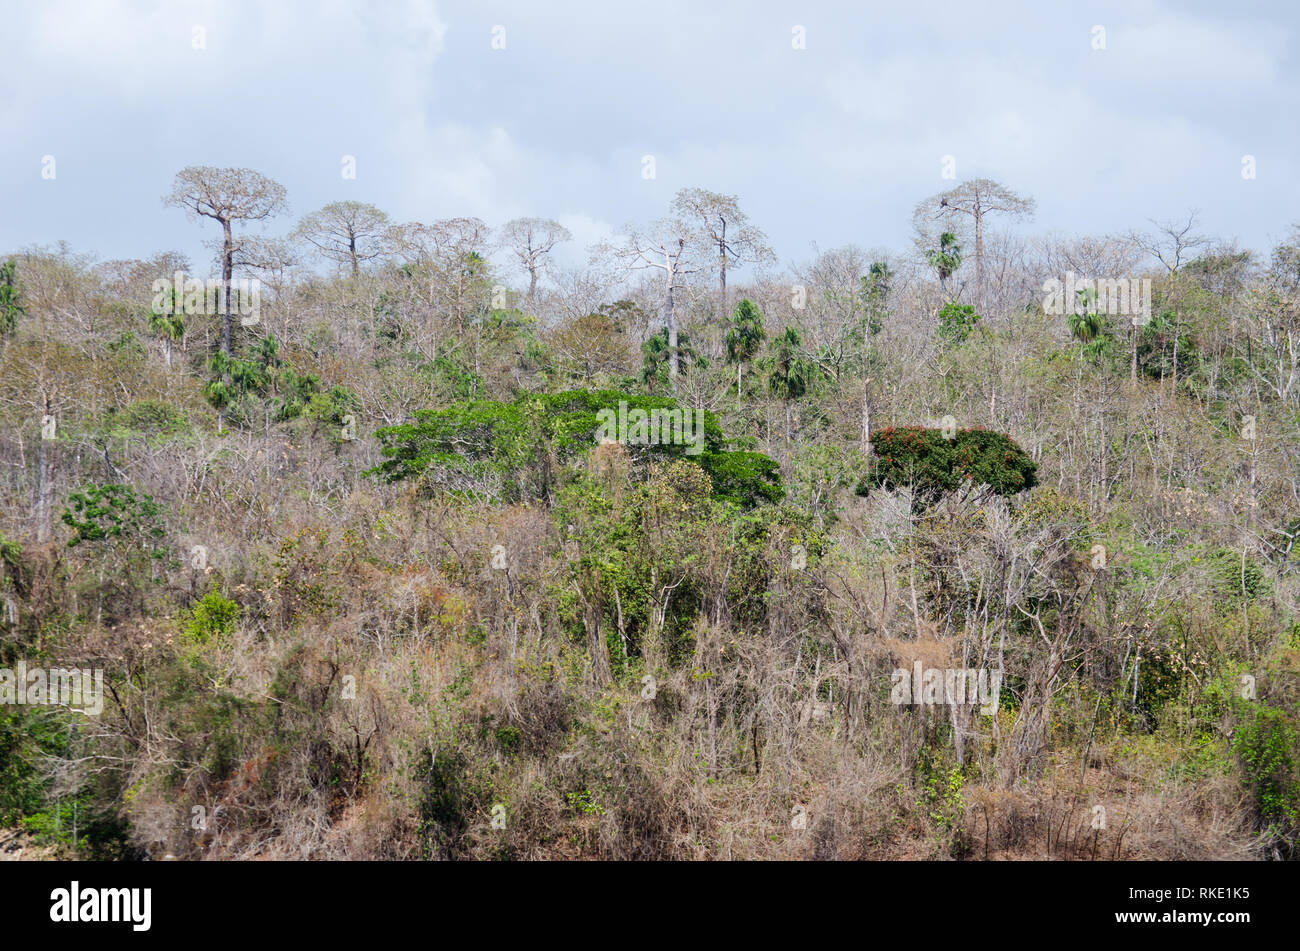 Tropical forest in Guna de Madugandi Reservation. Cavanillesia platanifolia trees are seen in the distance Stock Photo